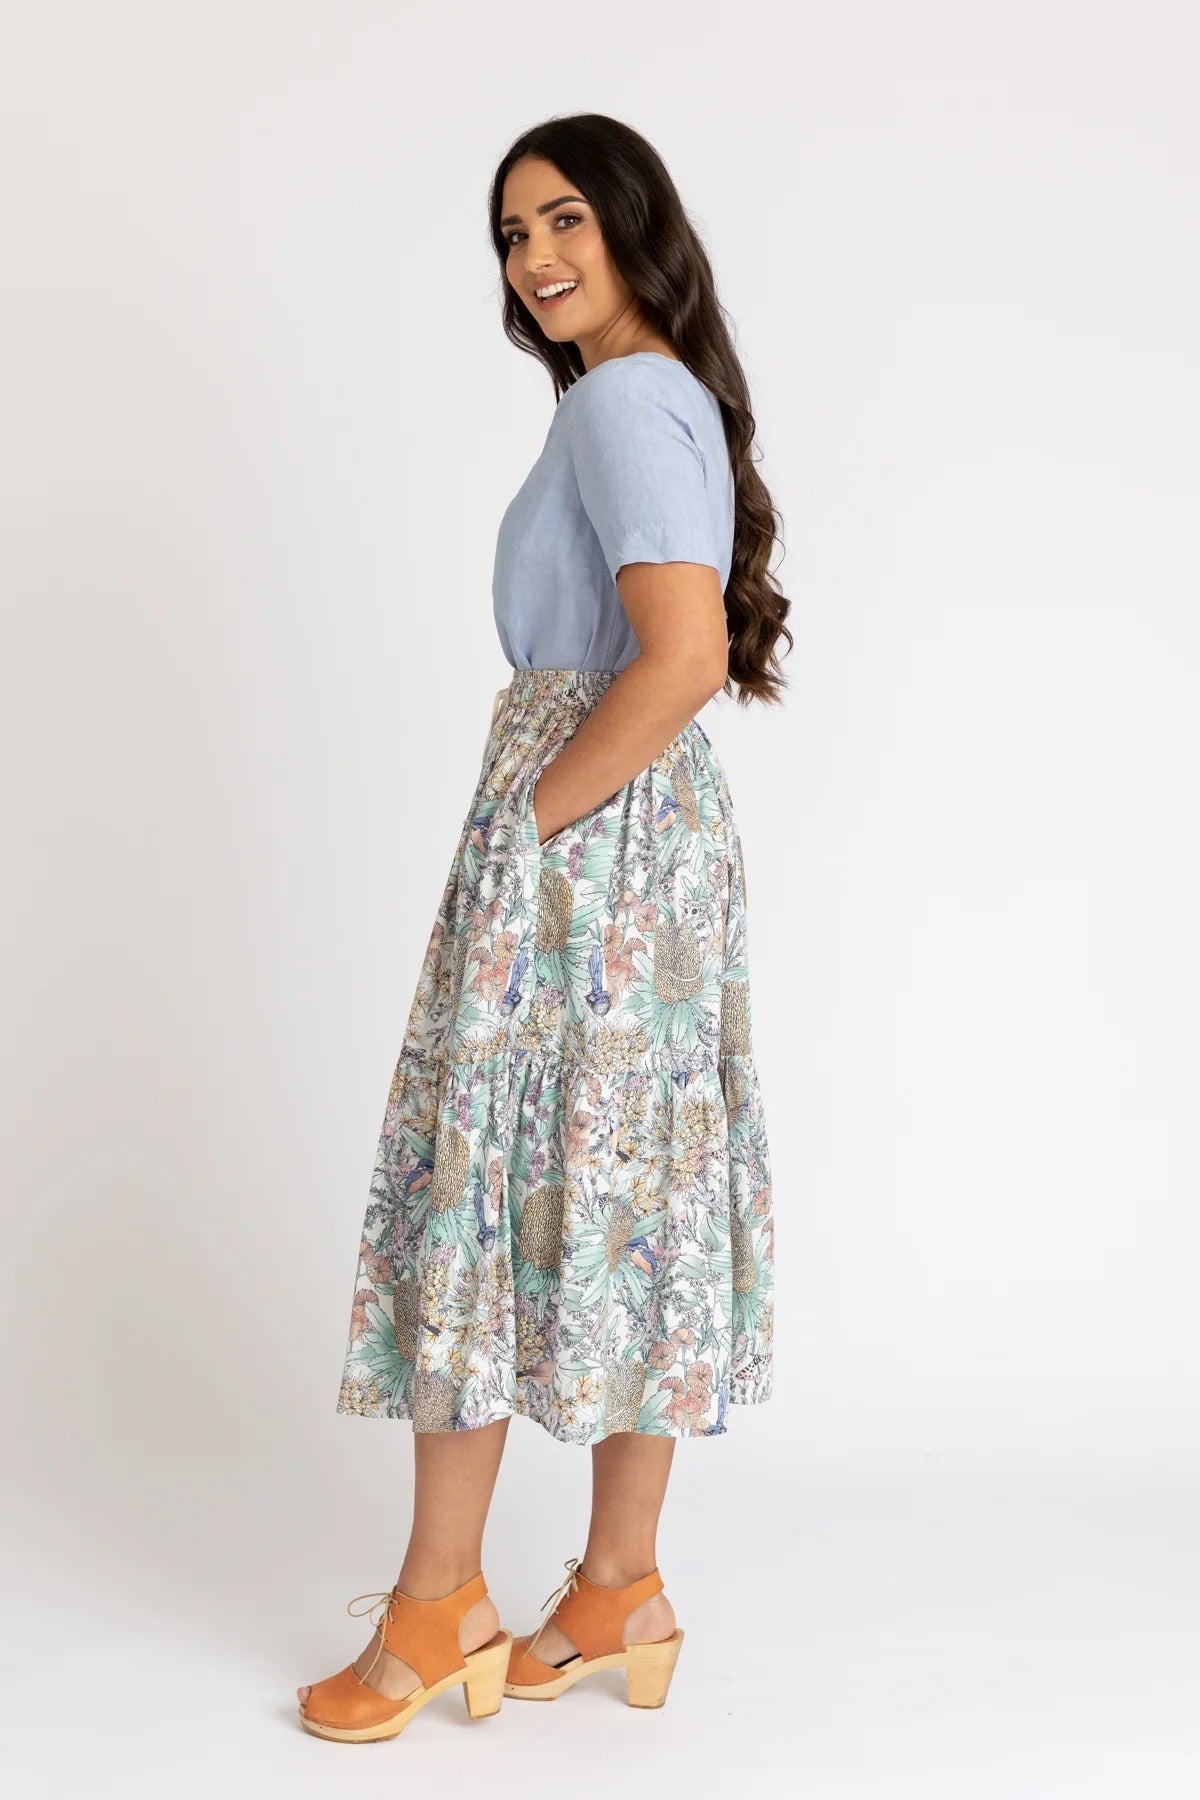 Megan Nielsen - Protea Capsule Wardrobe Sewing Pattern